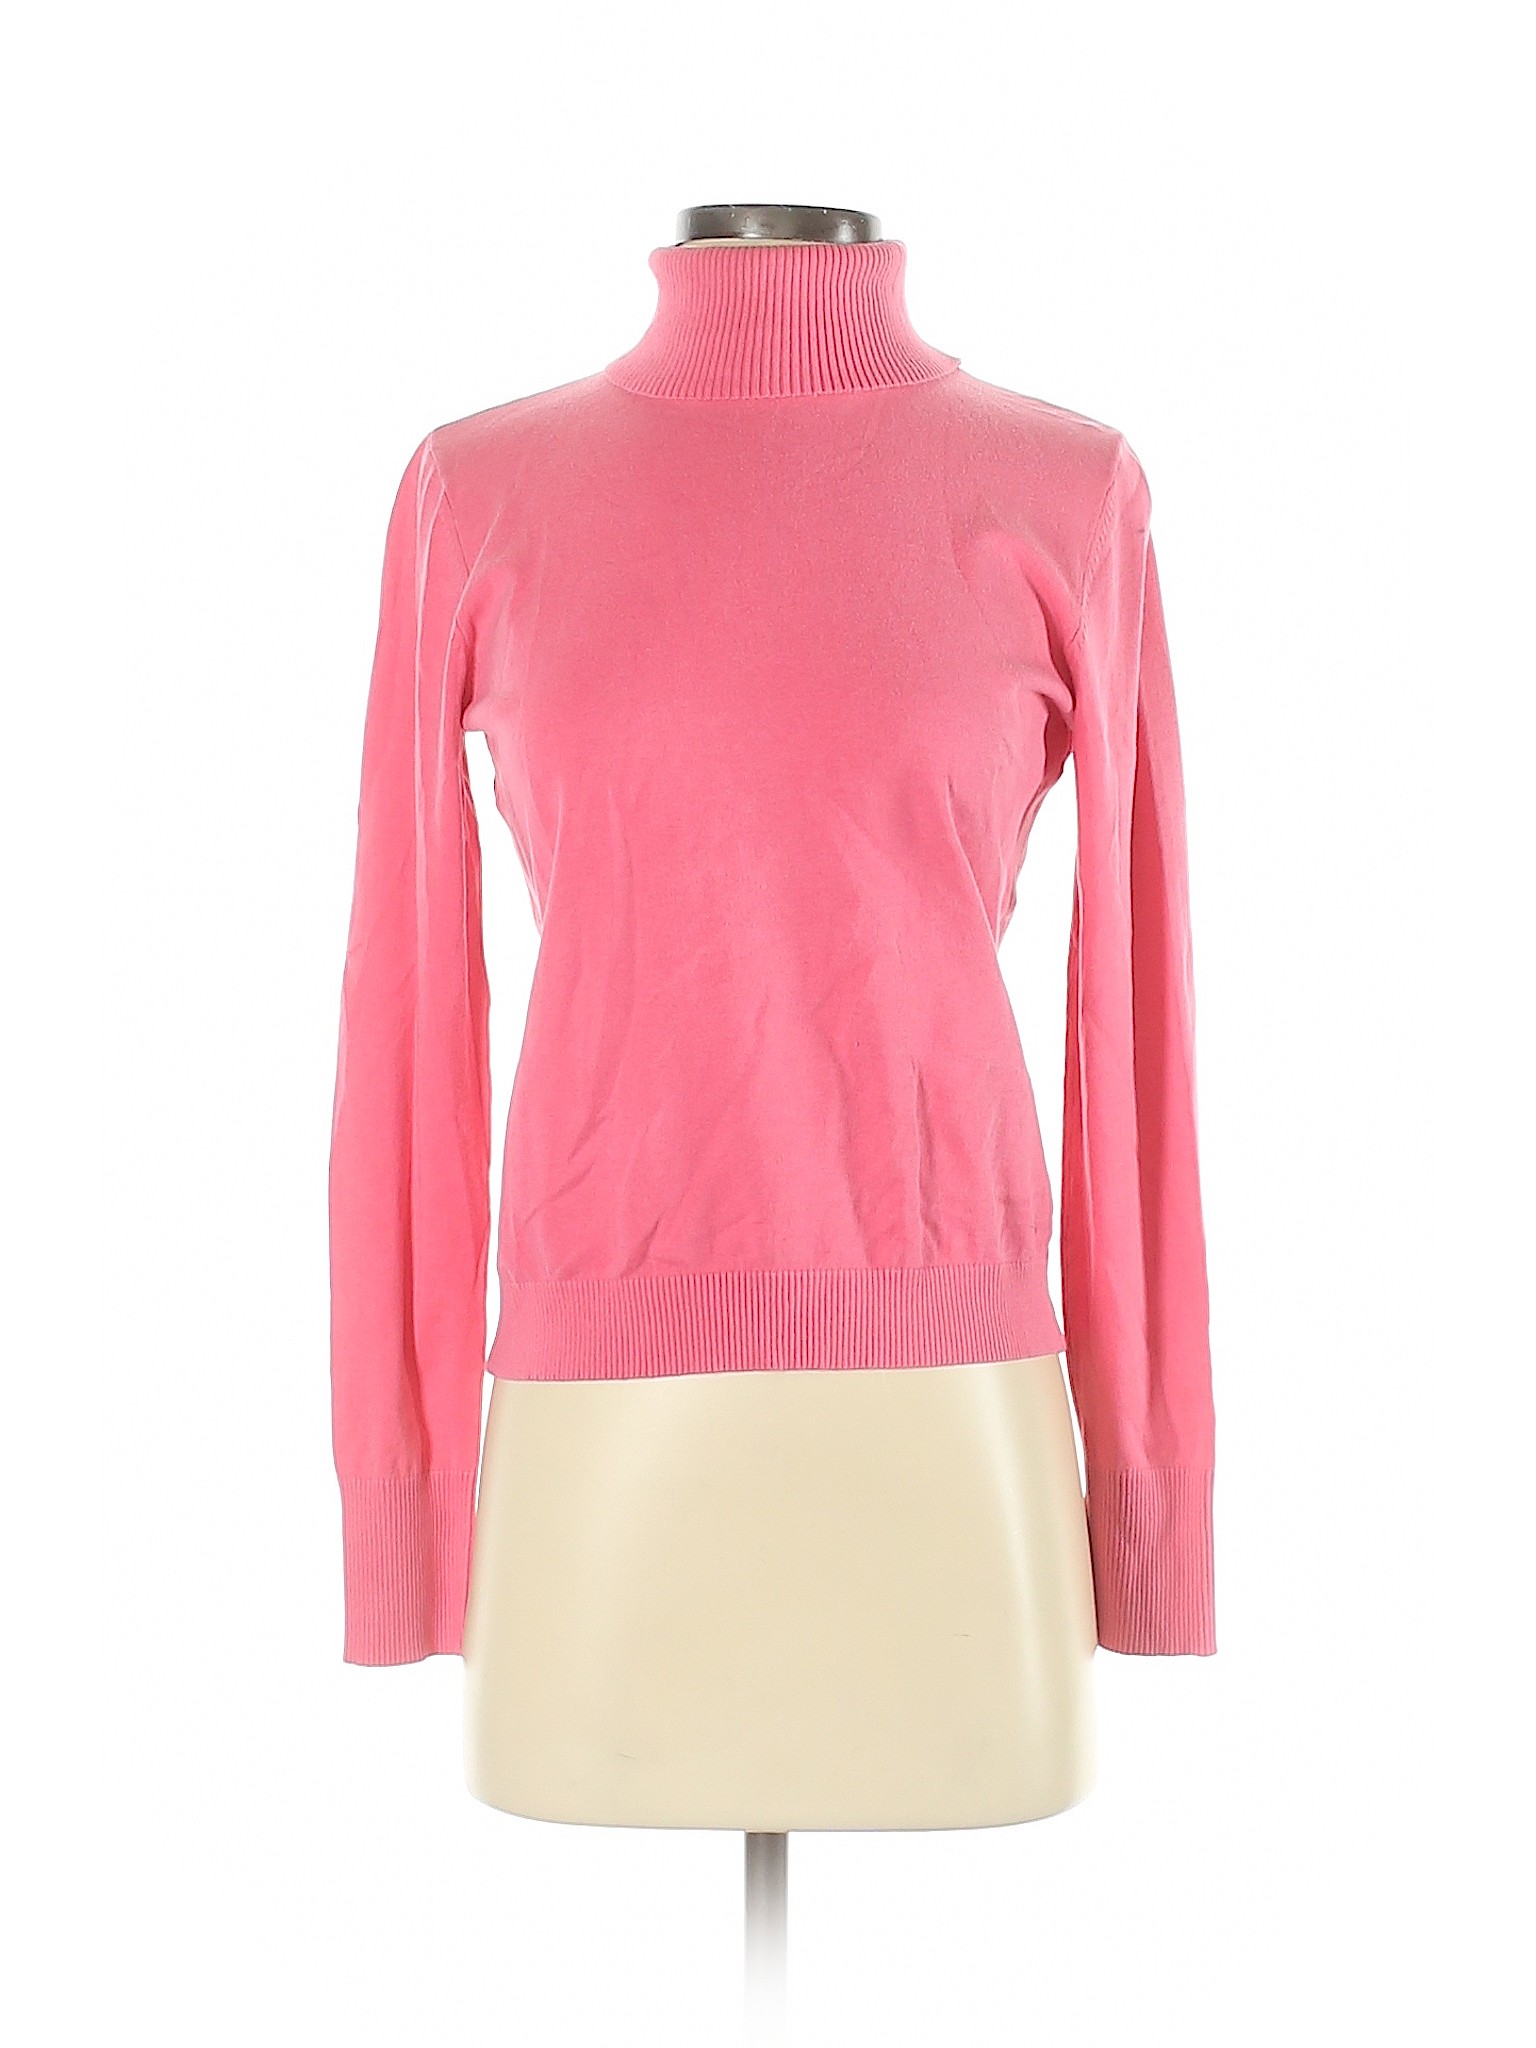 Assorted Brands Women Pink Turtleneck Sweater M | eBay